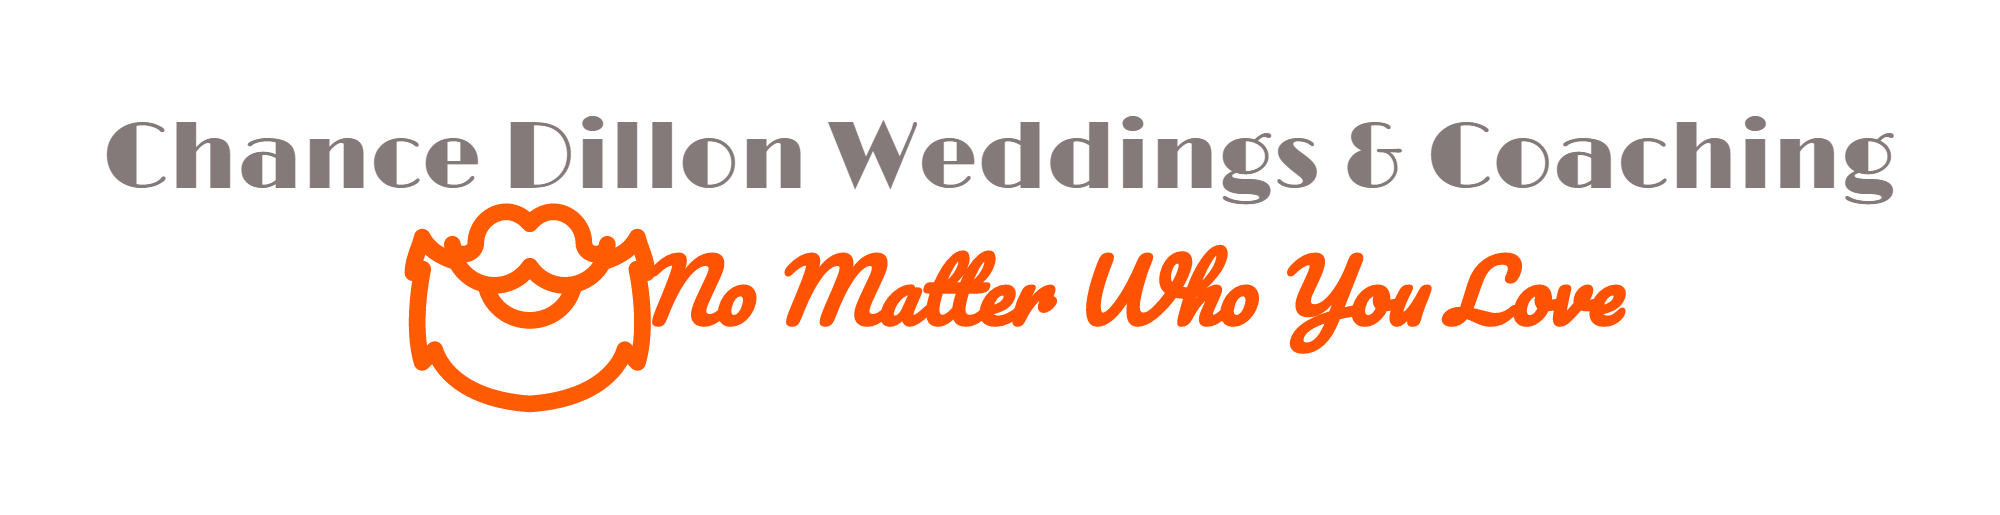 Chance Dillon Weddings & Coaching-logo (1).png